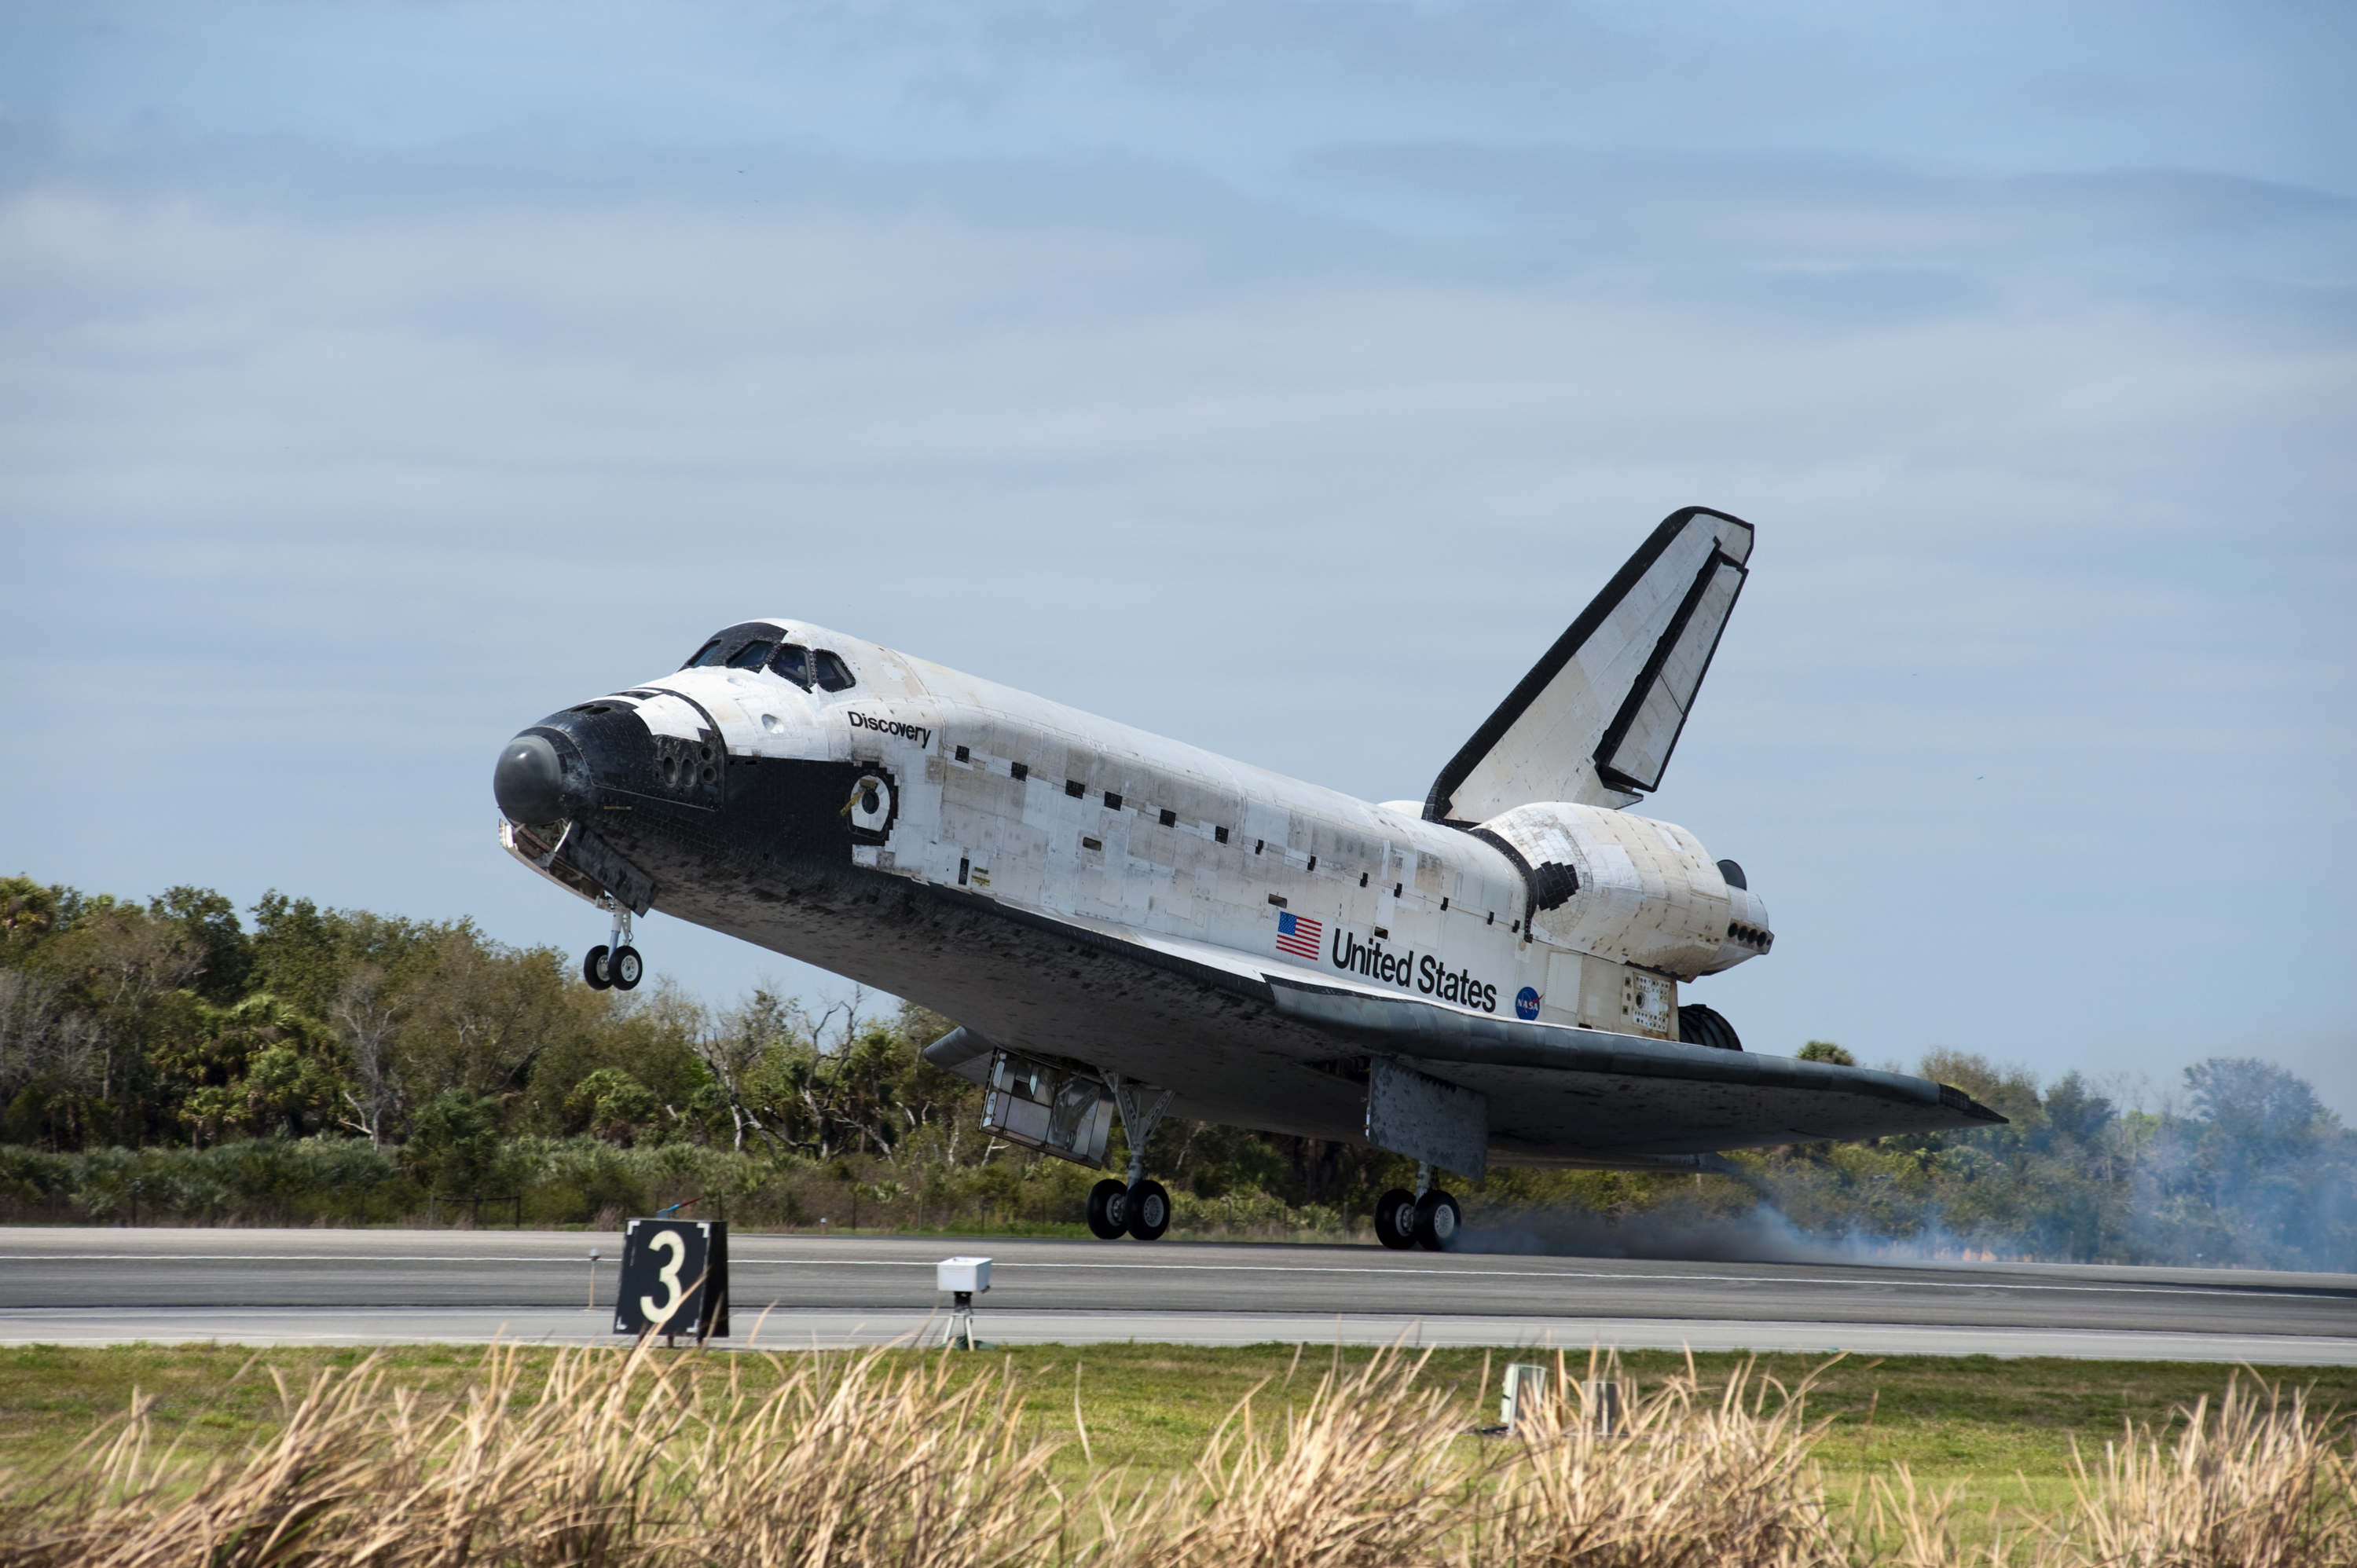 NASA - Launch and Landing